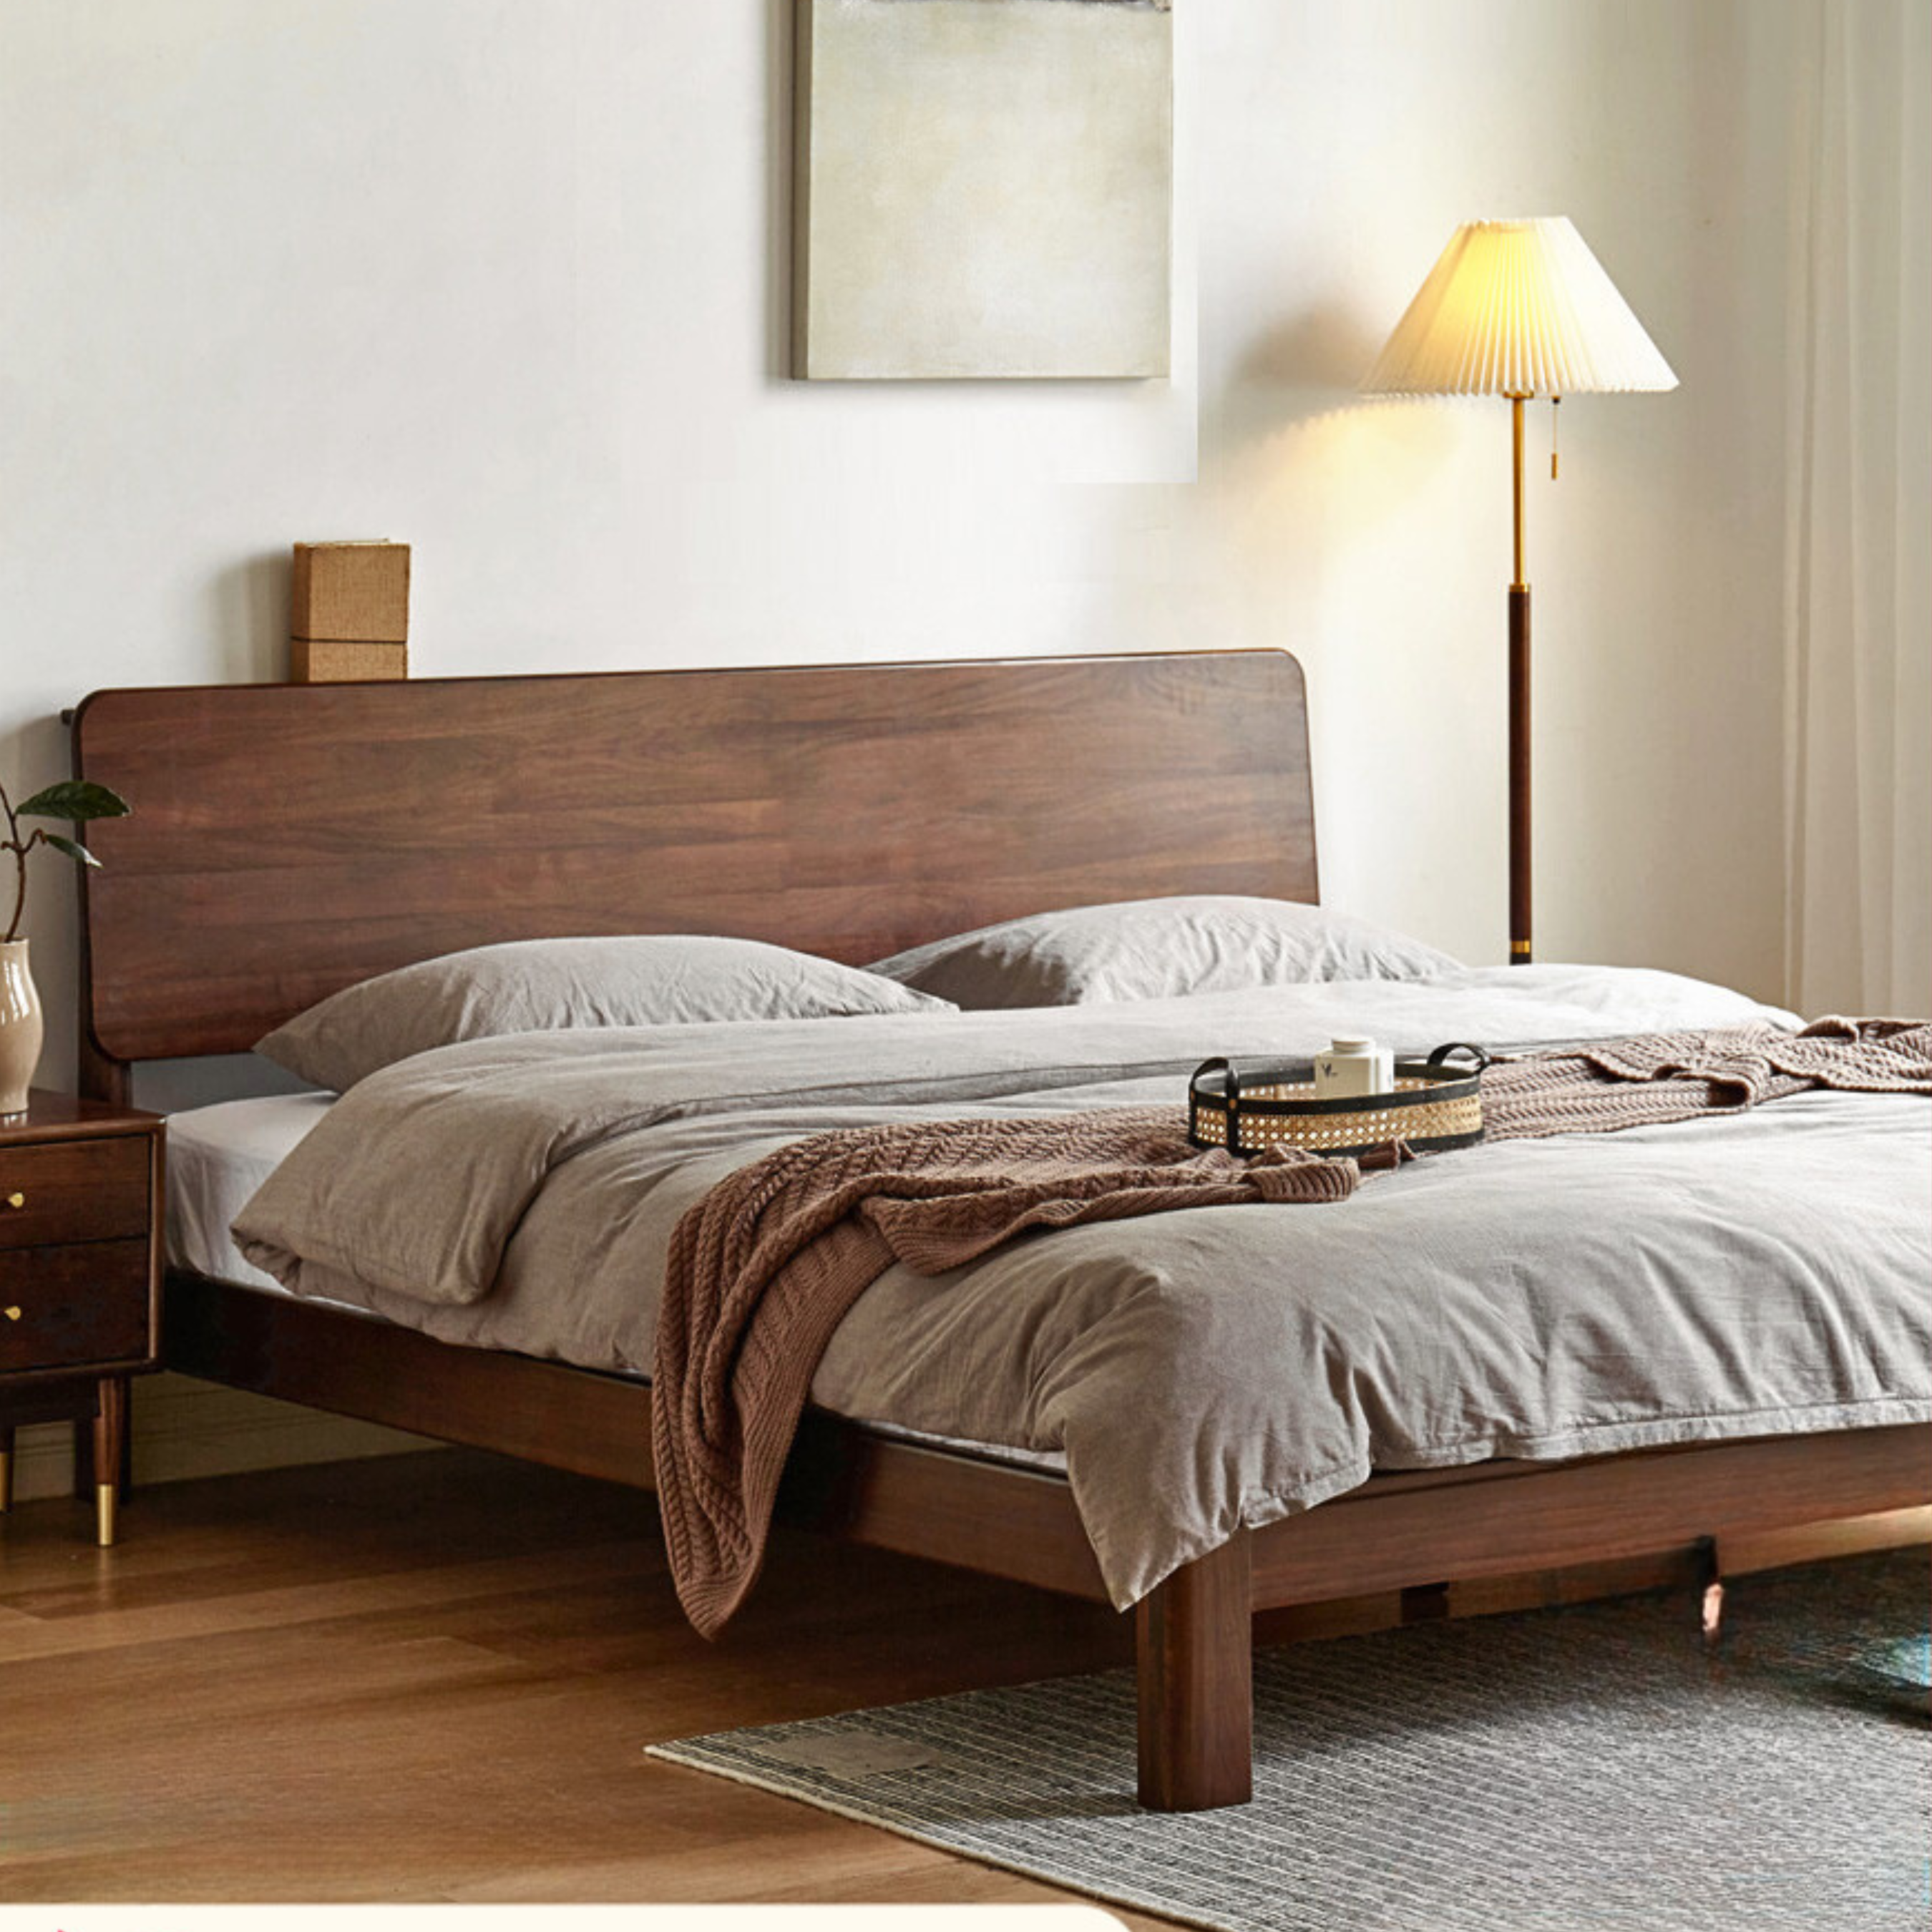 Black Walnut solid wood Bed"